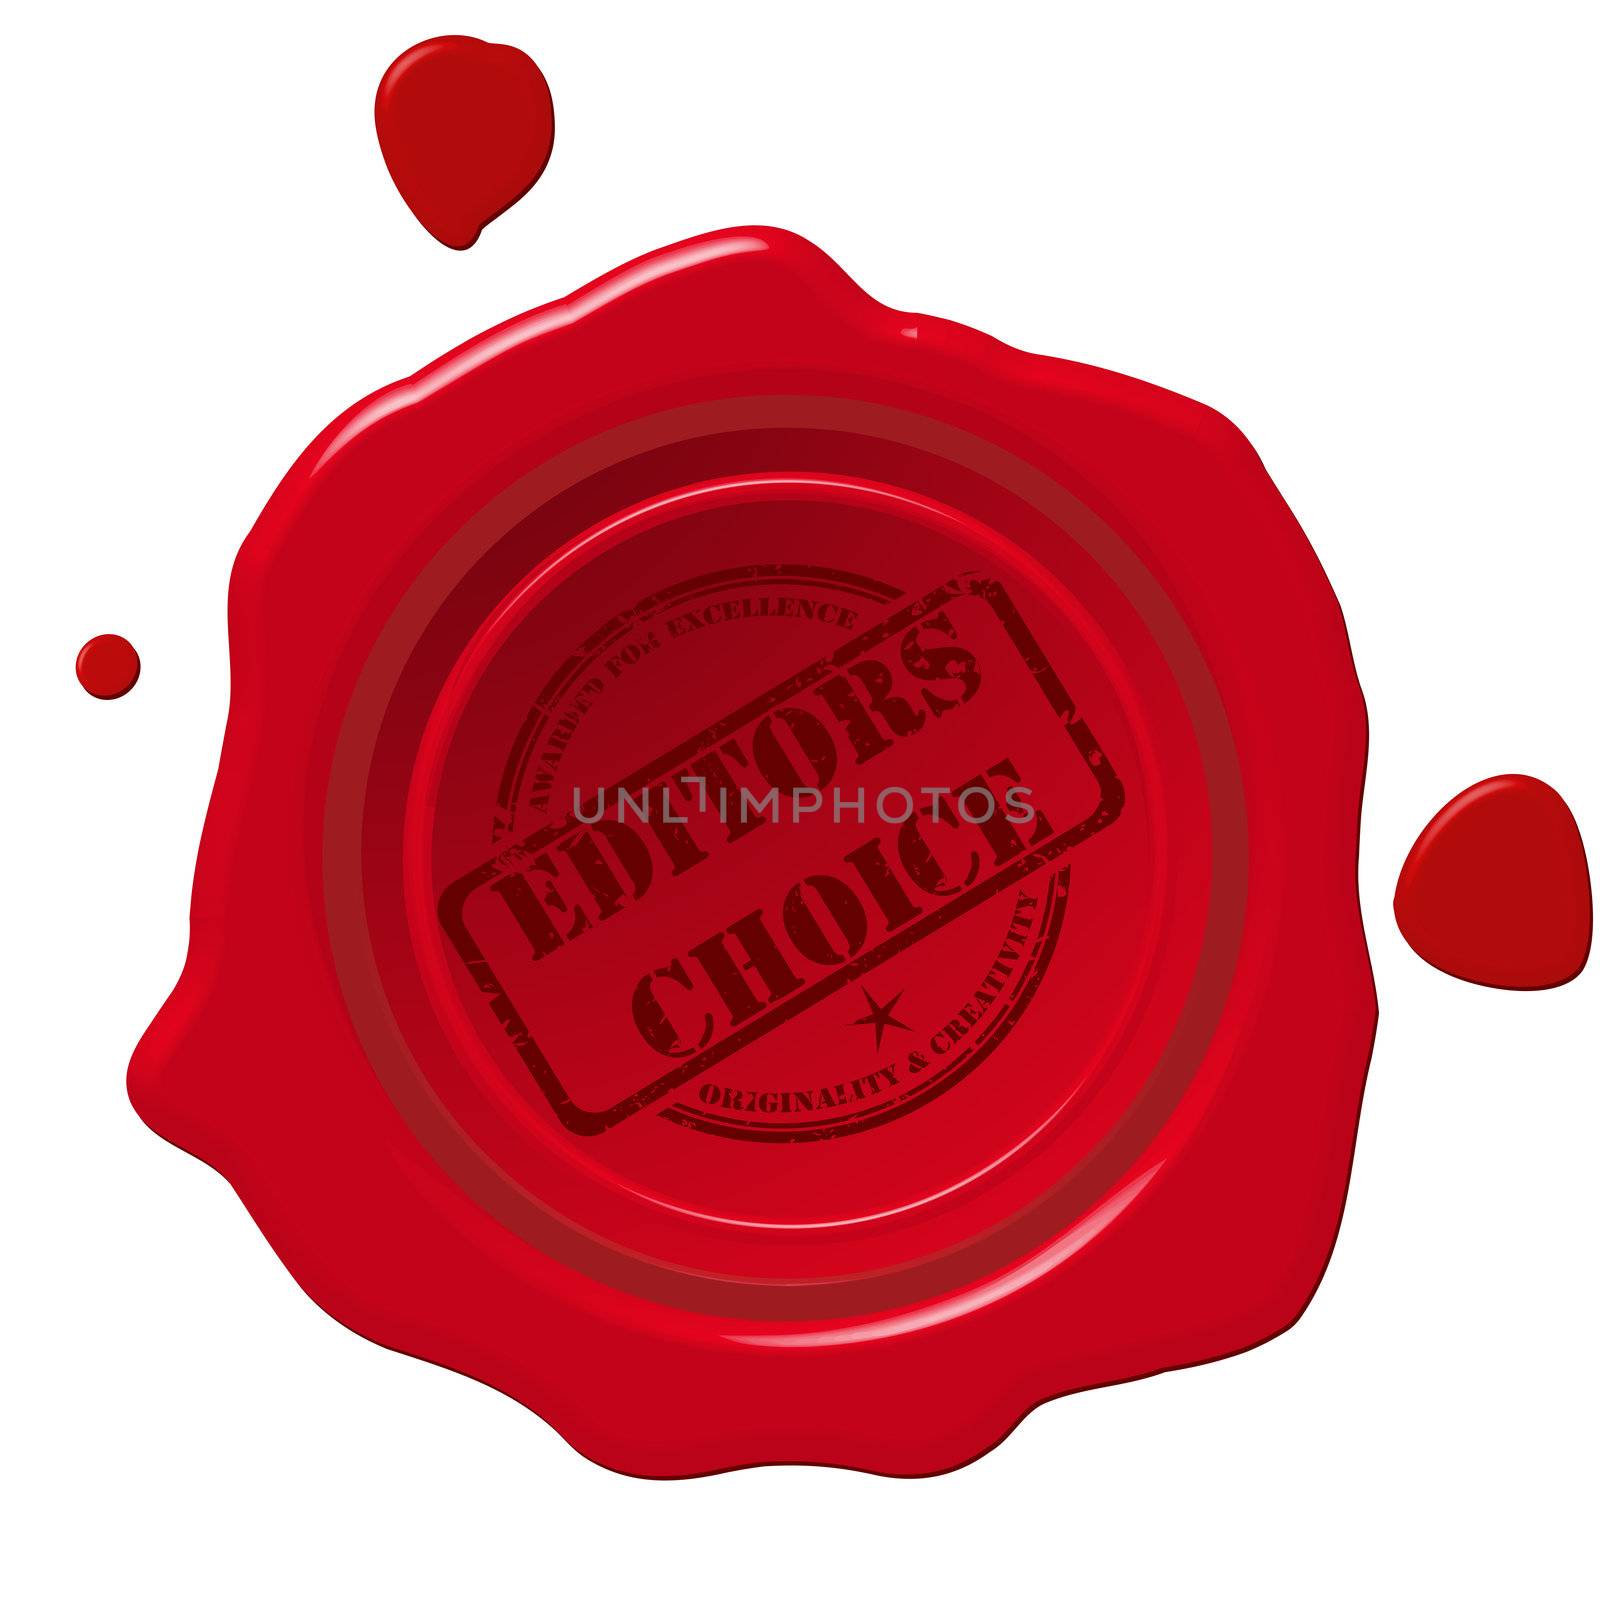 Editors choice seal by Lirch